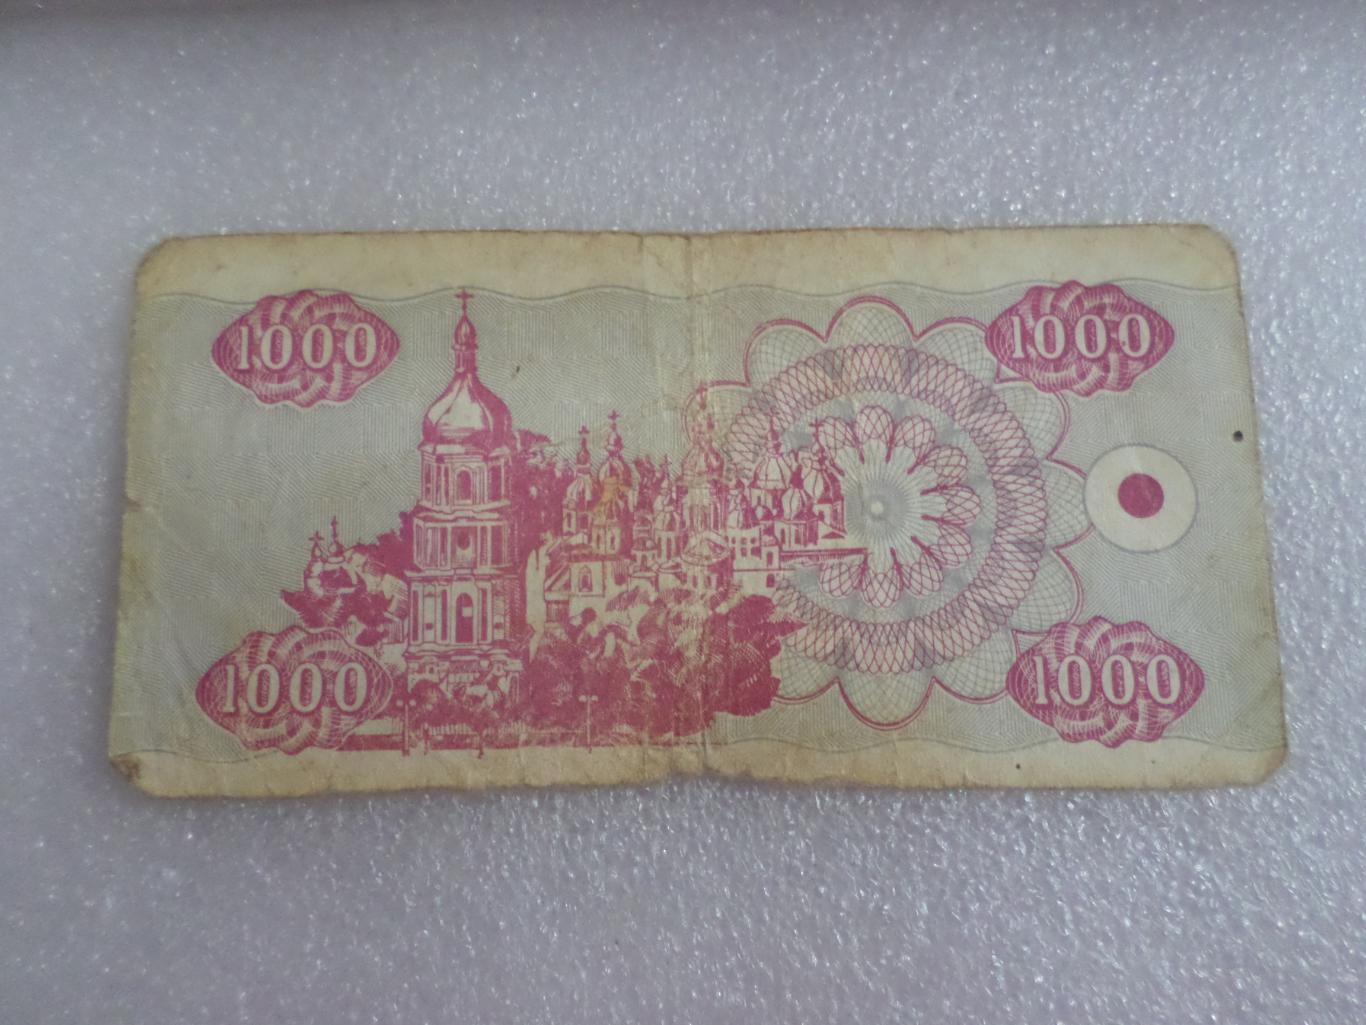 Банкнота 1000 купонов карбованцев Украина 1992 г